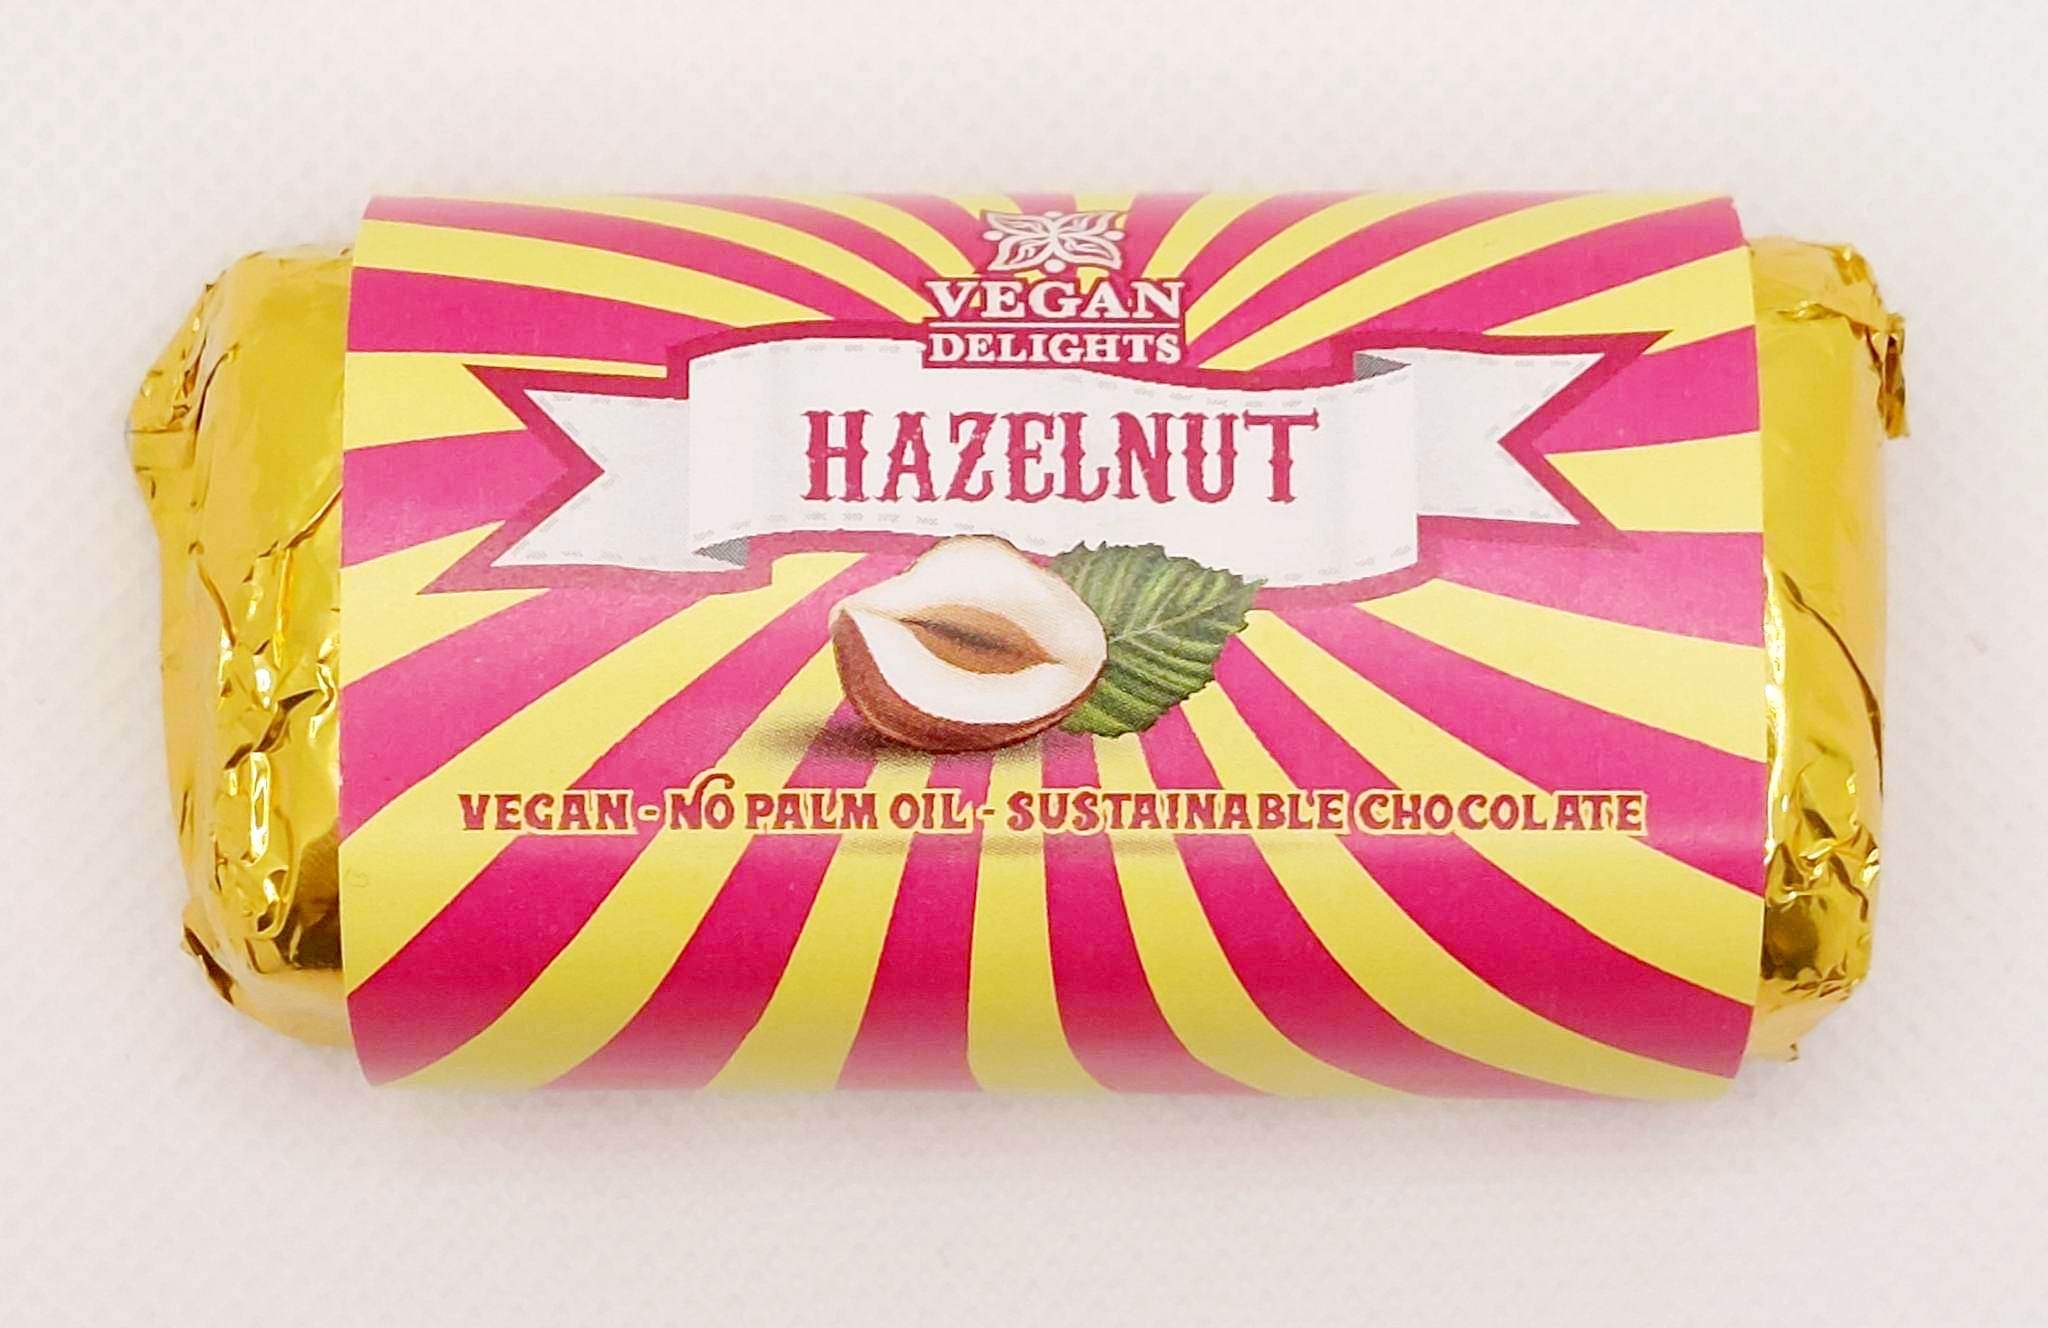 Vegan Delights - Hazelnut Bar/Hasselnötsbit, 40 g